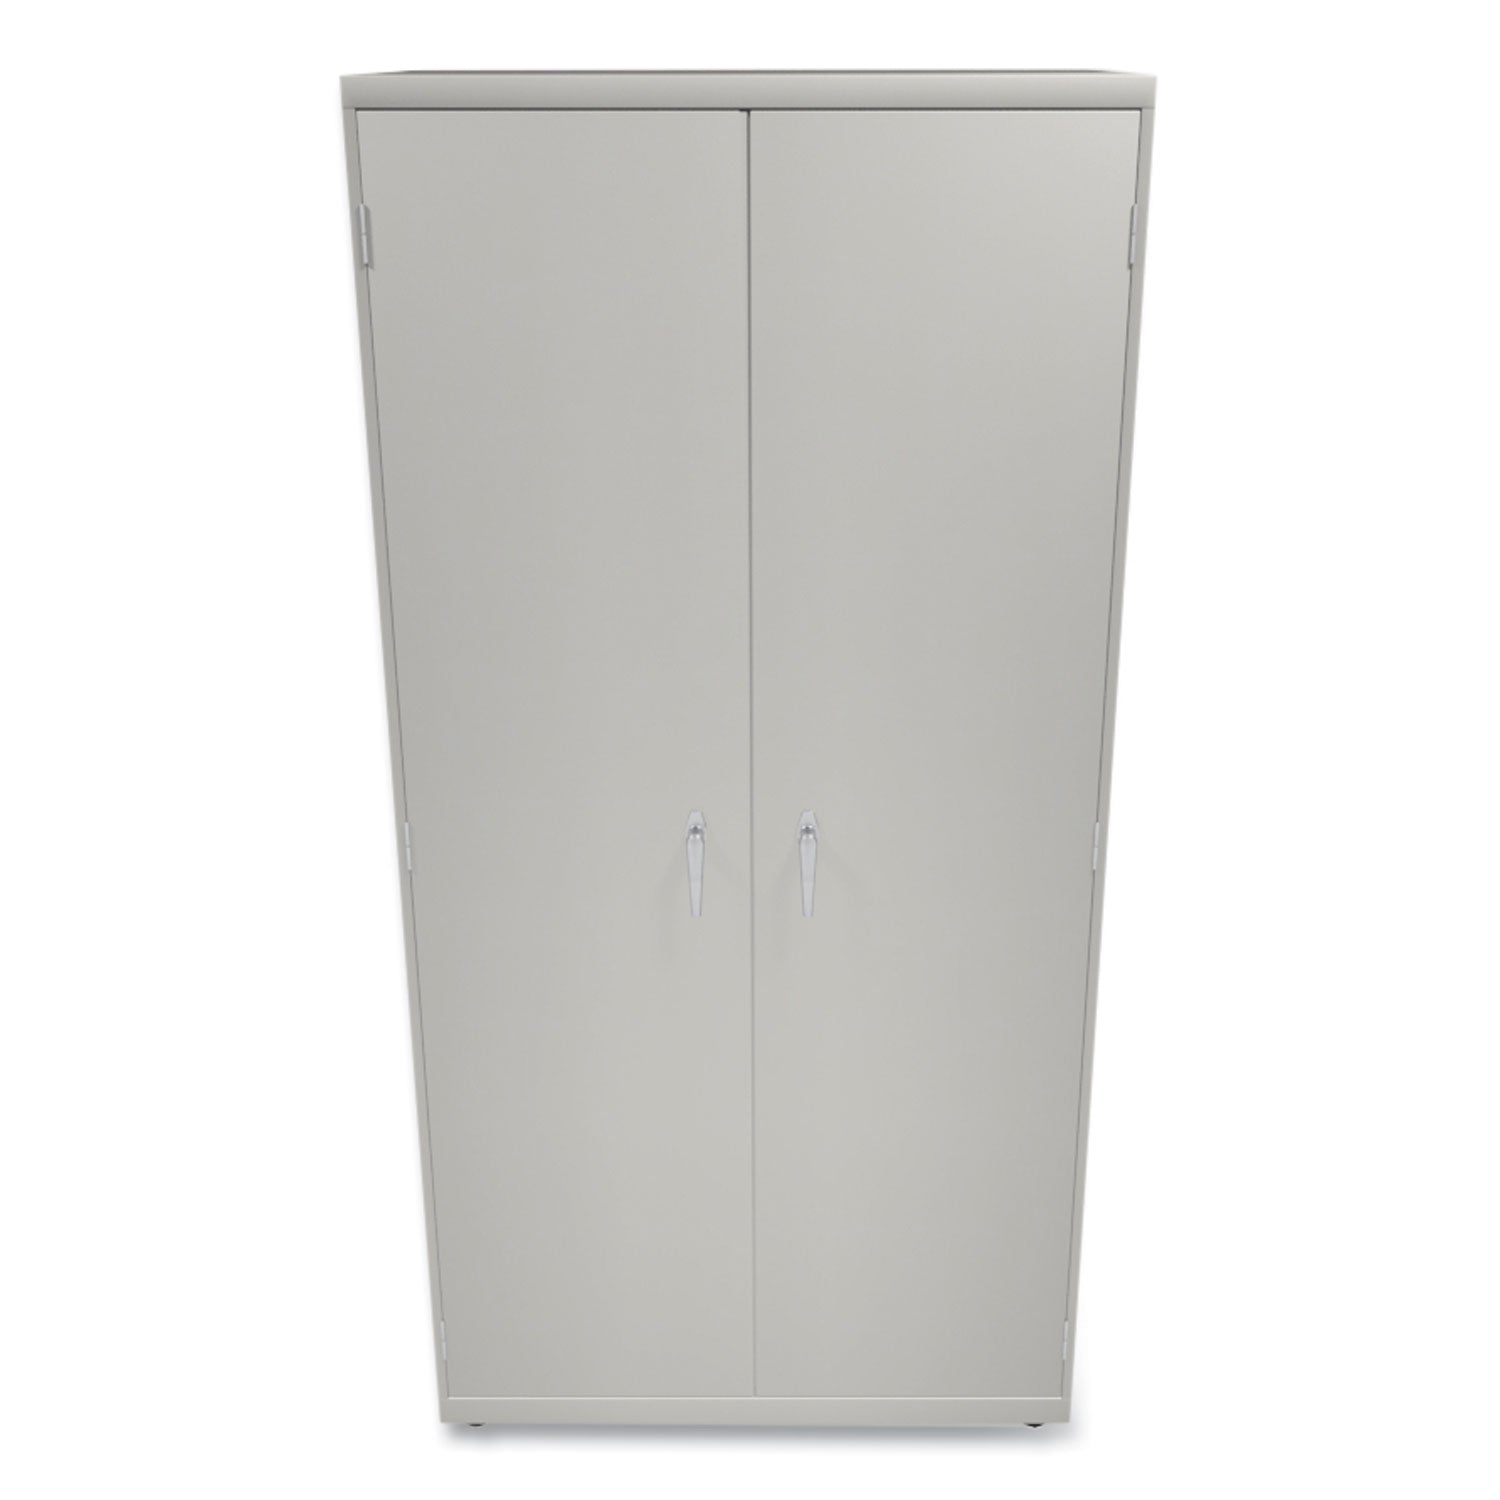 Assembled Storage Cabinet, 36w x 24.25d x 71.75h, Light Gray - 